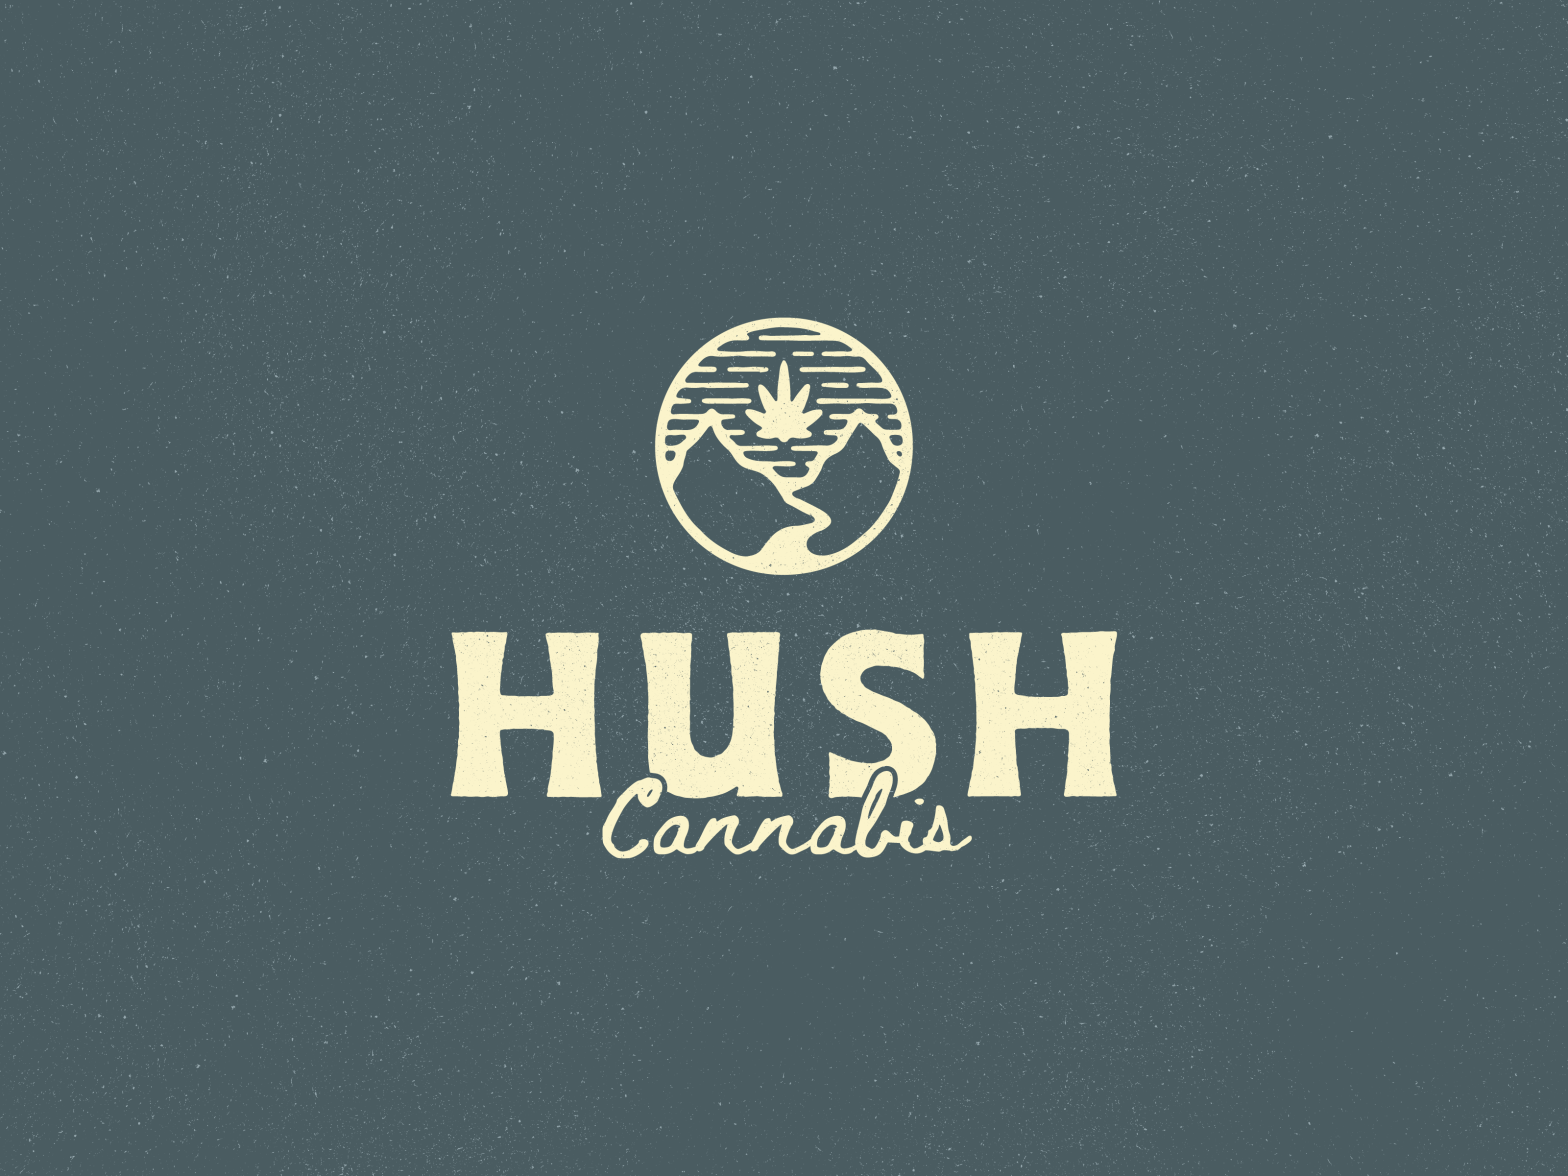 Hush Cannabis Branding by Alex Beebe on Dribbble